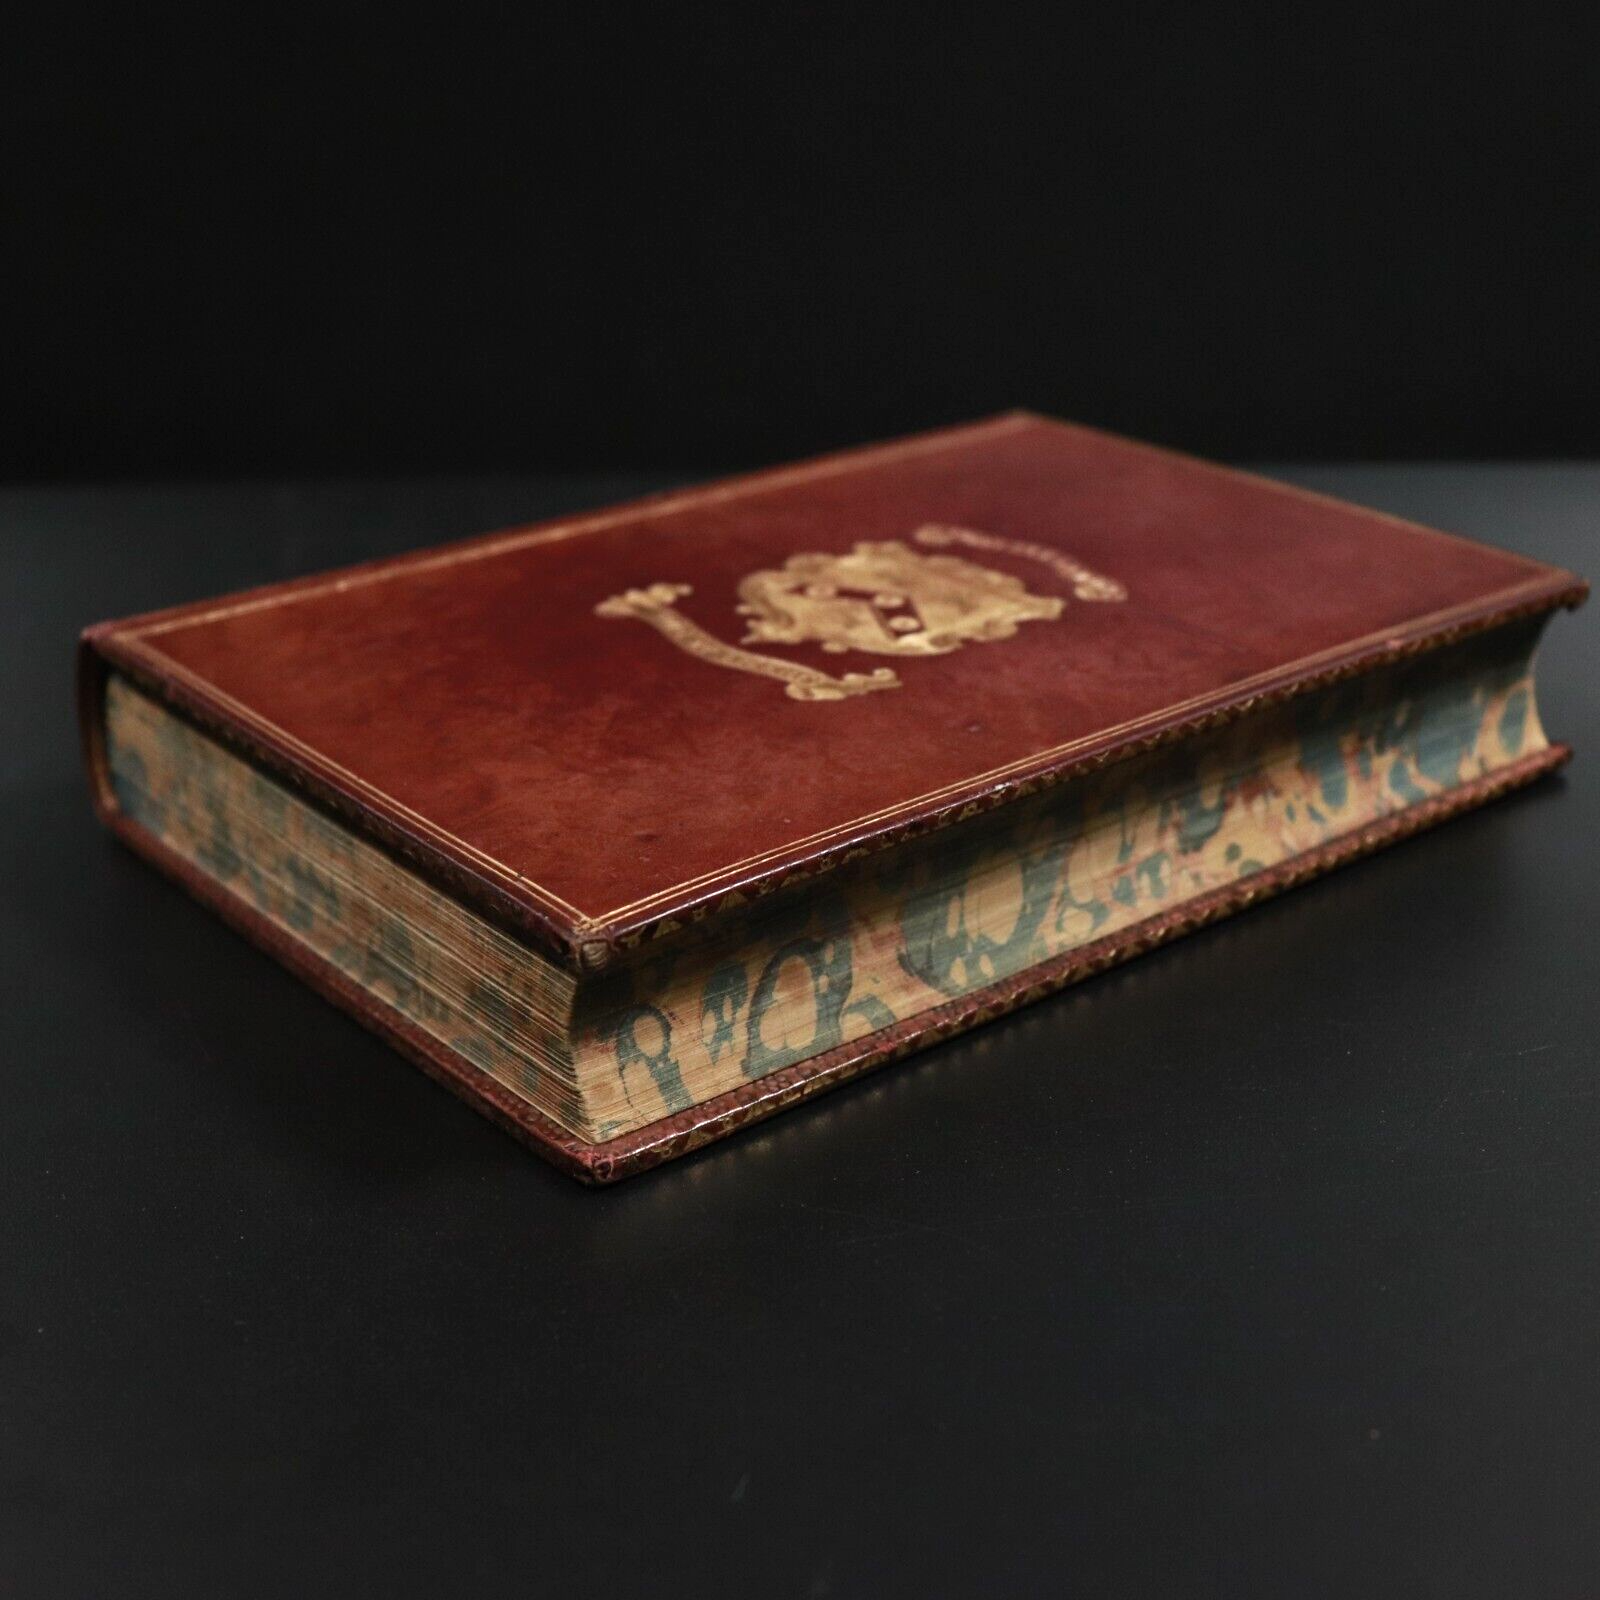 1884 Hereward The Wake by Charles Kingsley Antique Fiction Book Fine Binding - 0